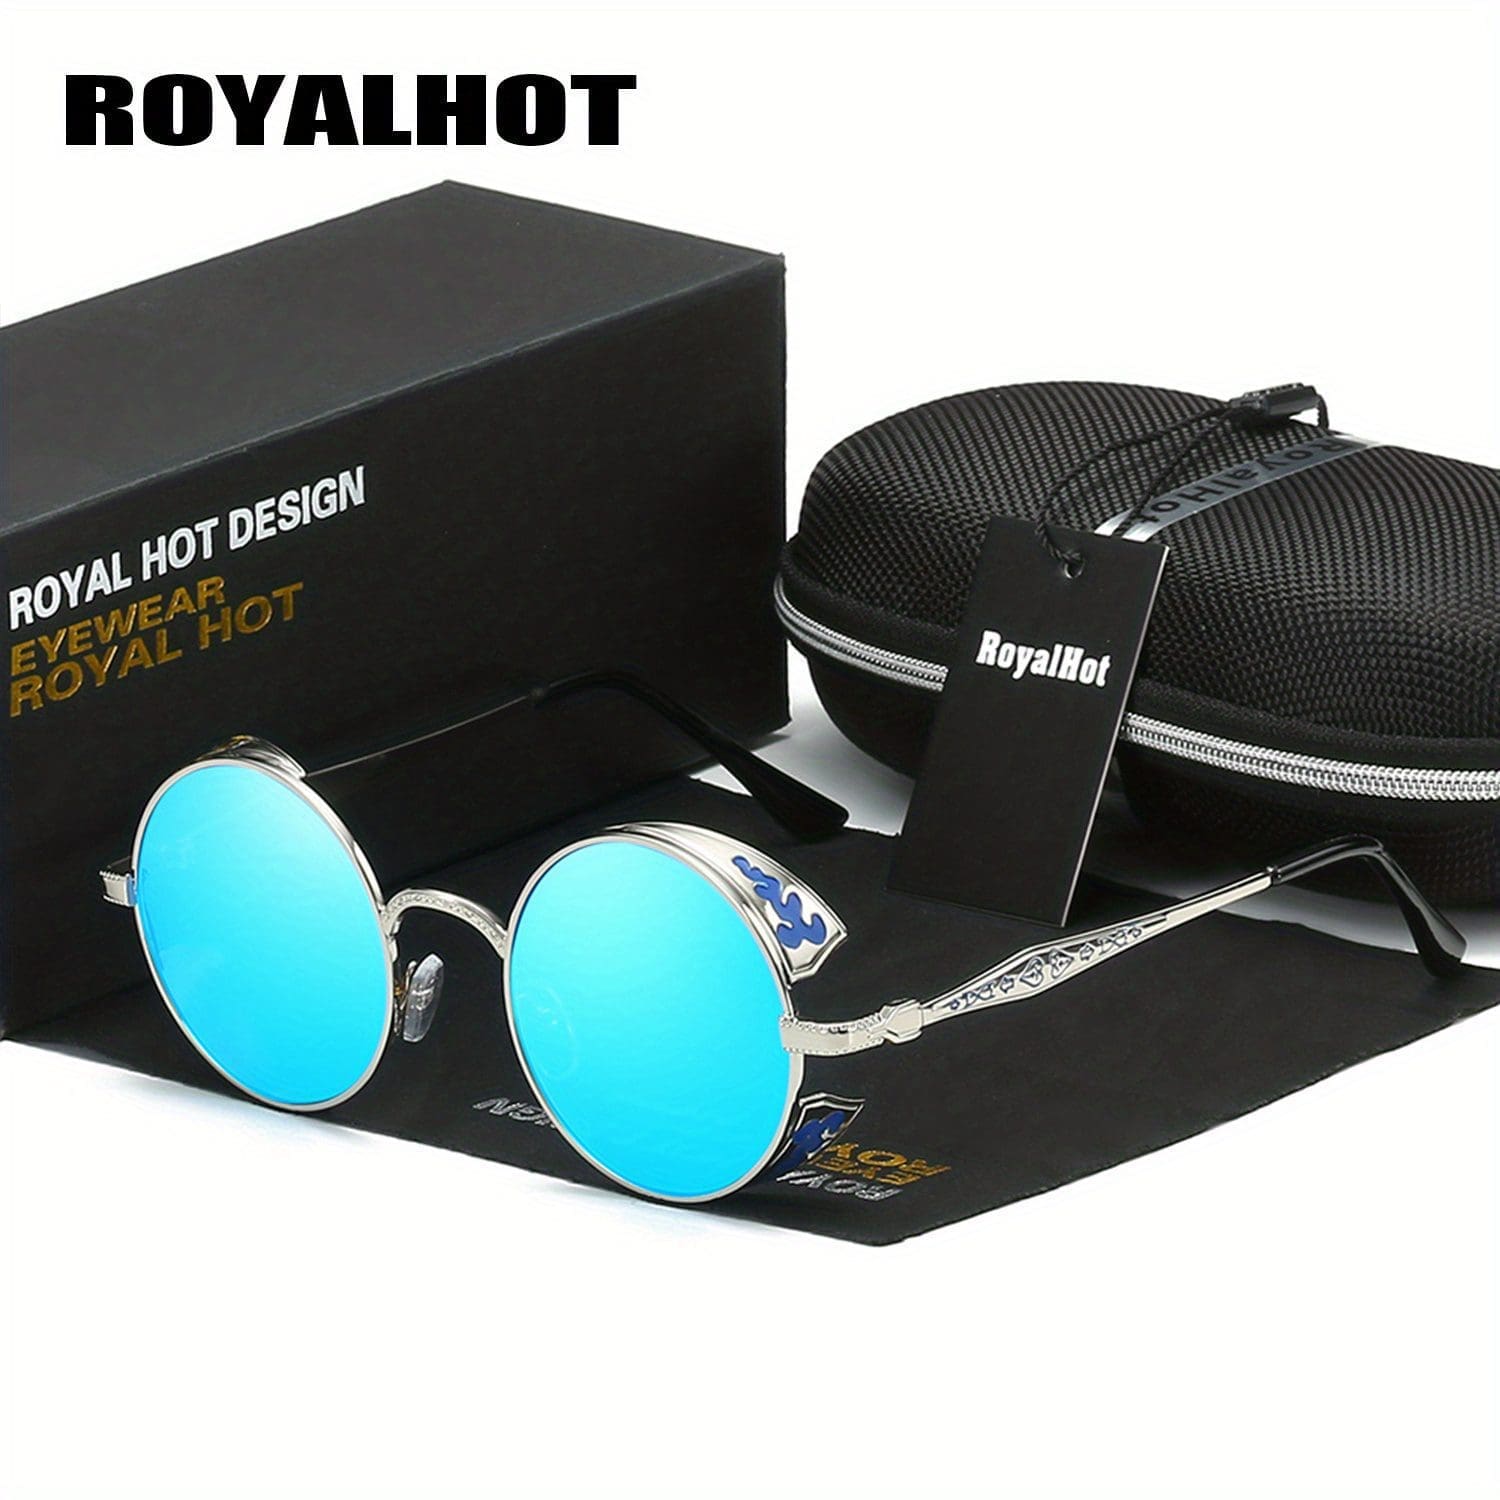 Royal Hot Sunglasses